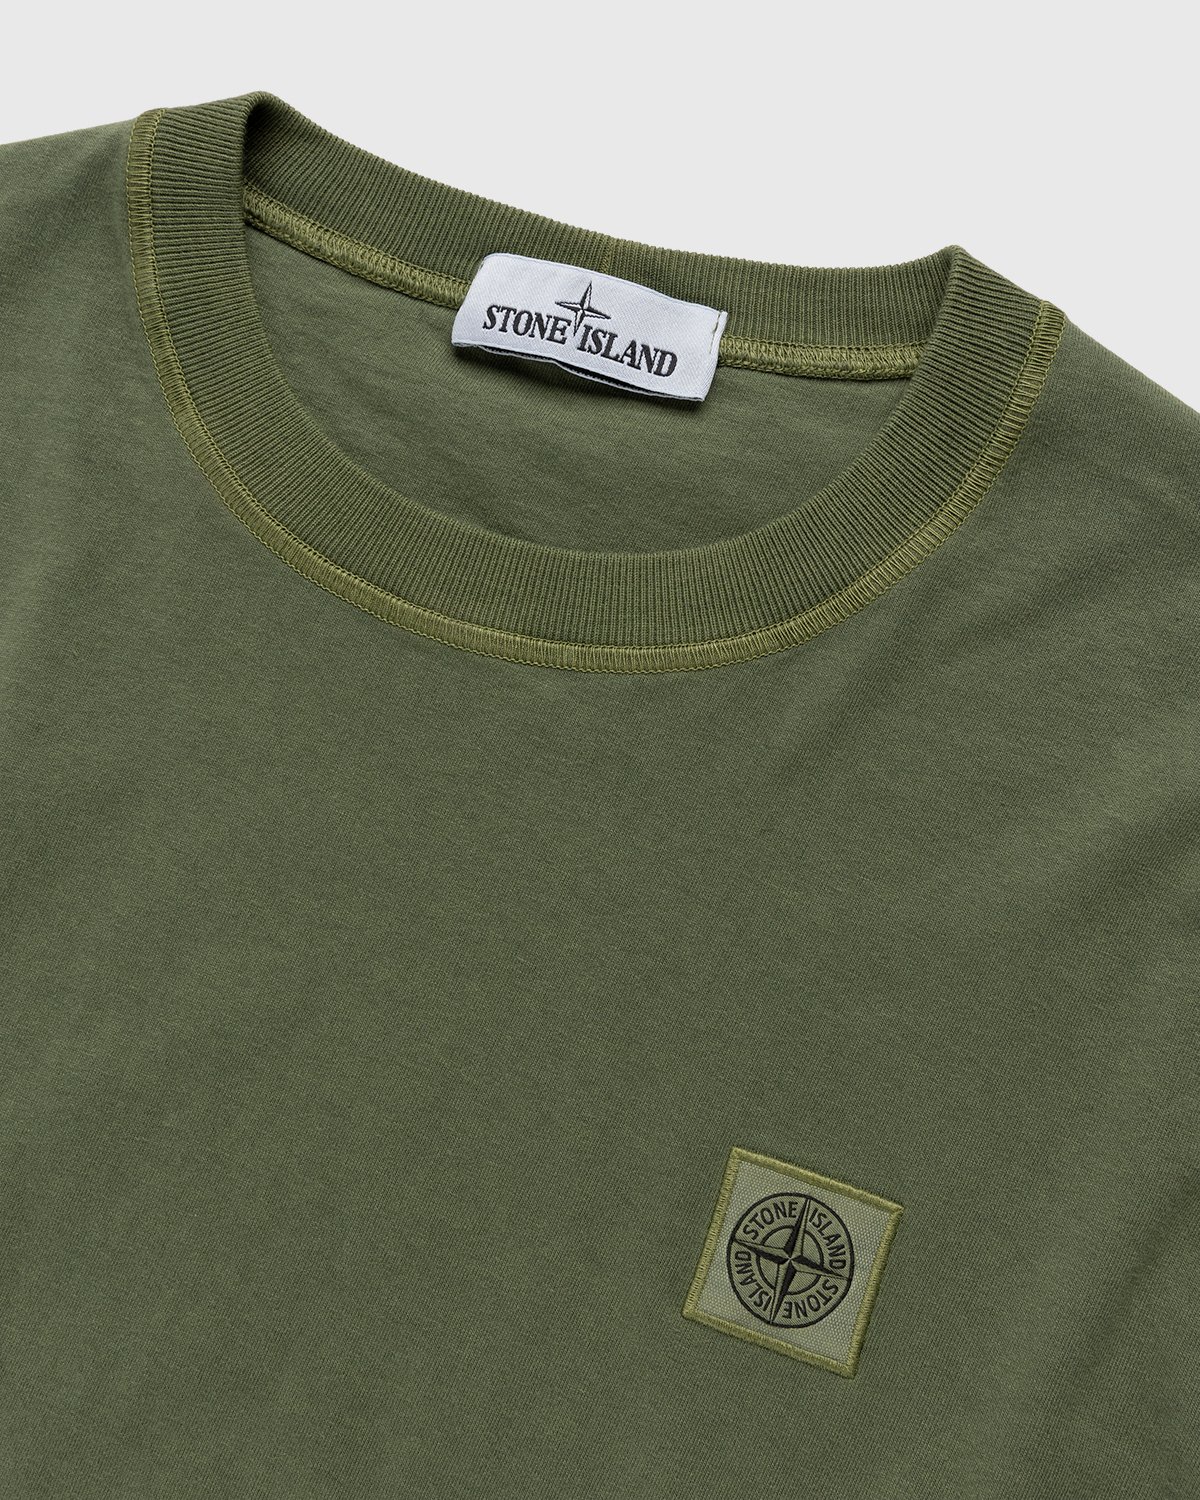 Stone Island - 21857 Garment-Dyed Fissato T-Shirt Olive Green - Clothing - Green - Image 4